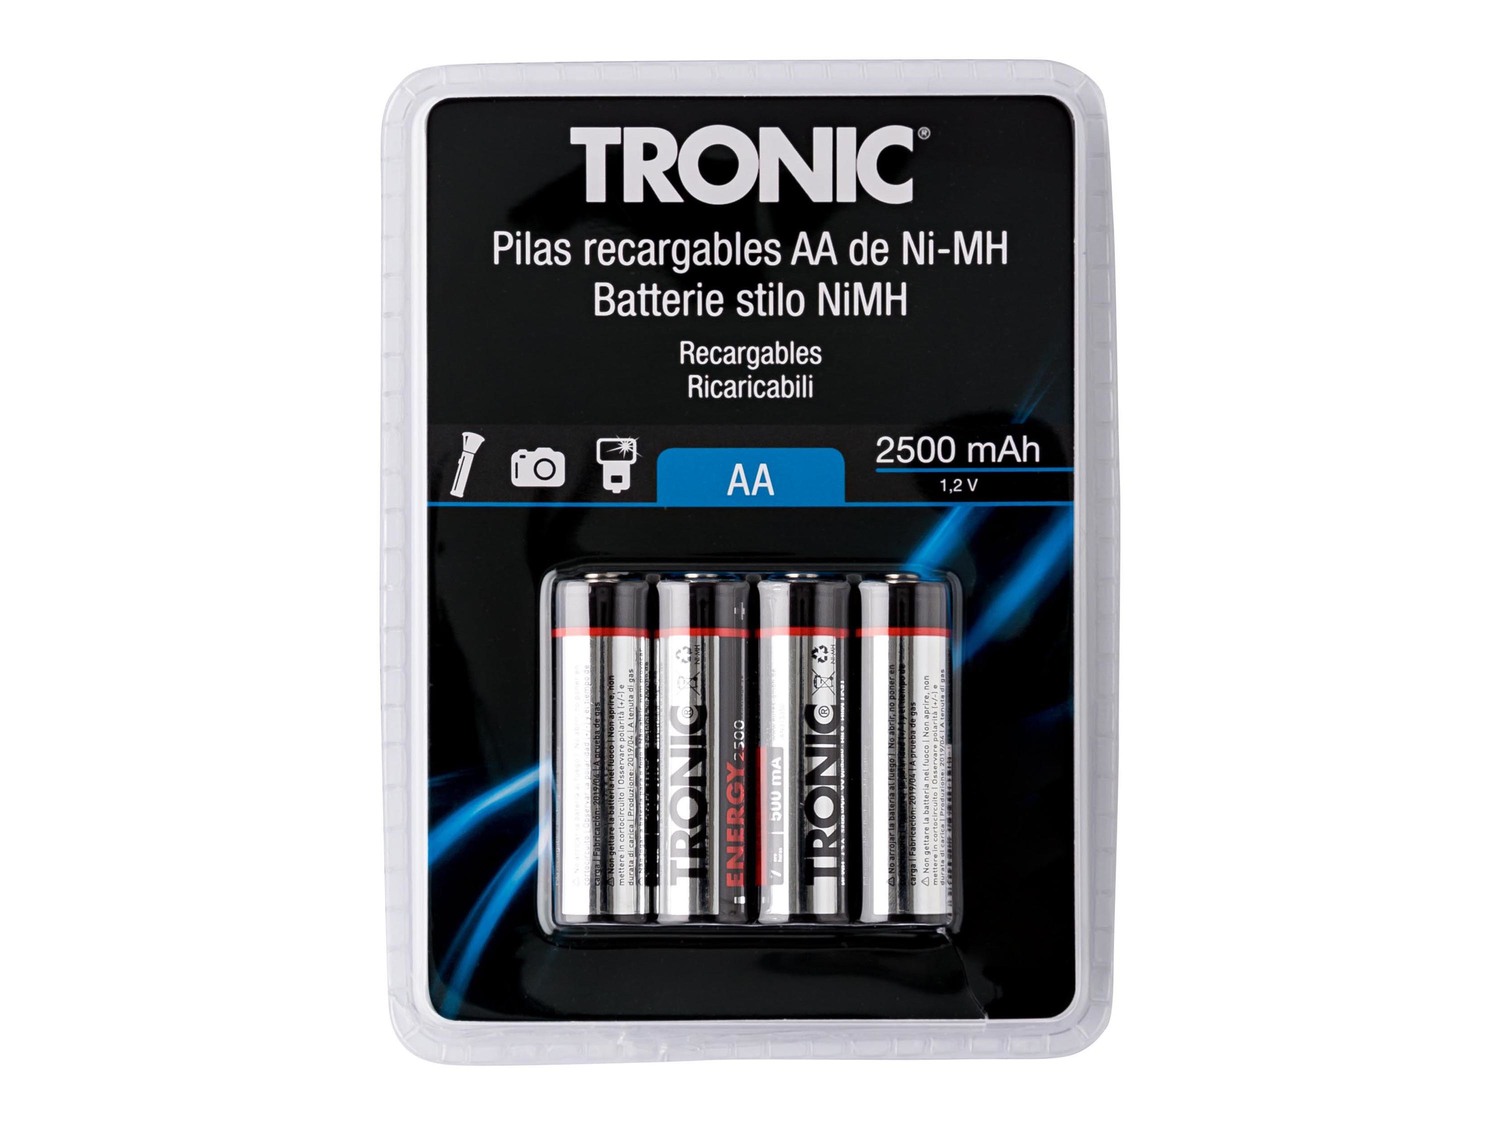 Batterie ricaricabili Tronic, prezzo 3.99 &#8364;  
-  NiMH 1,2 V
-  AA o AAA